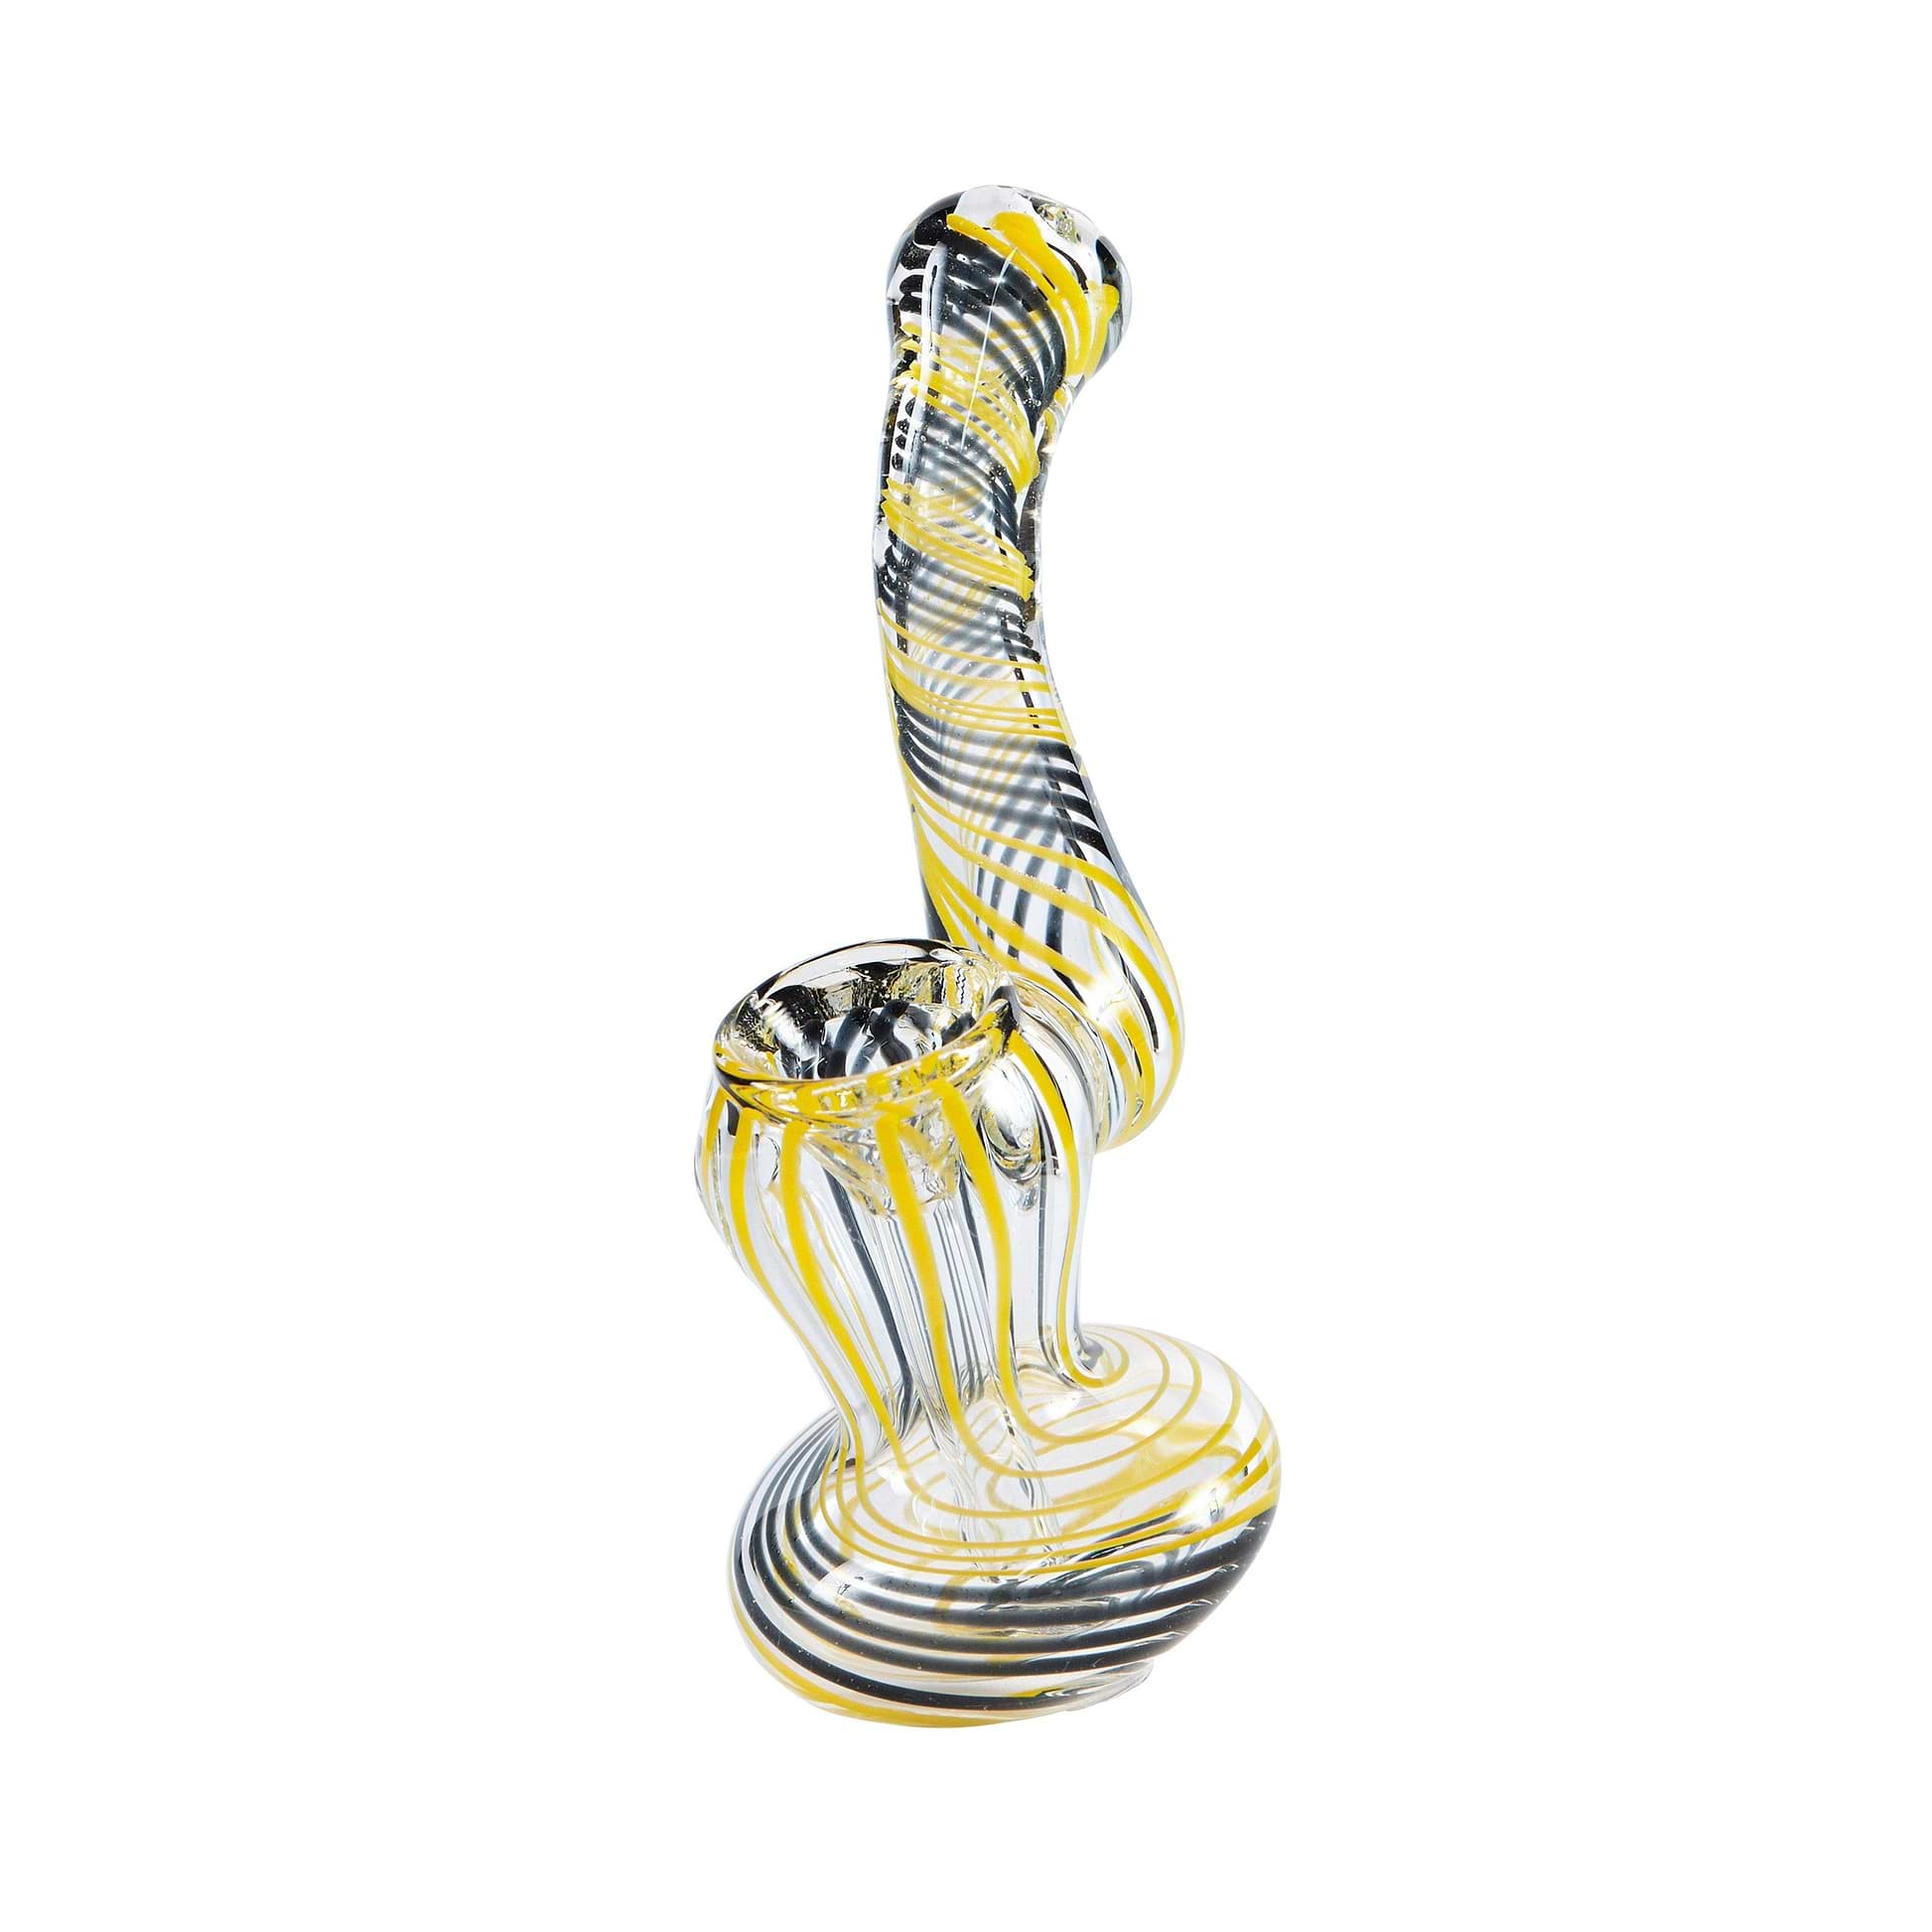 4-inch heat-safe mini glass classic bubbler bent neck Banana Split swirl colors twisting design genie-in-a-bottle shape